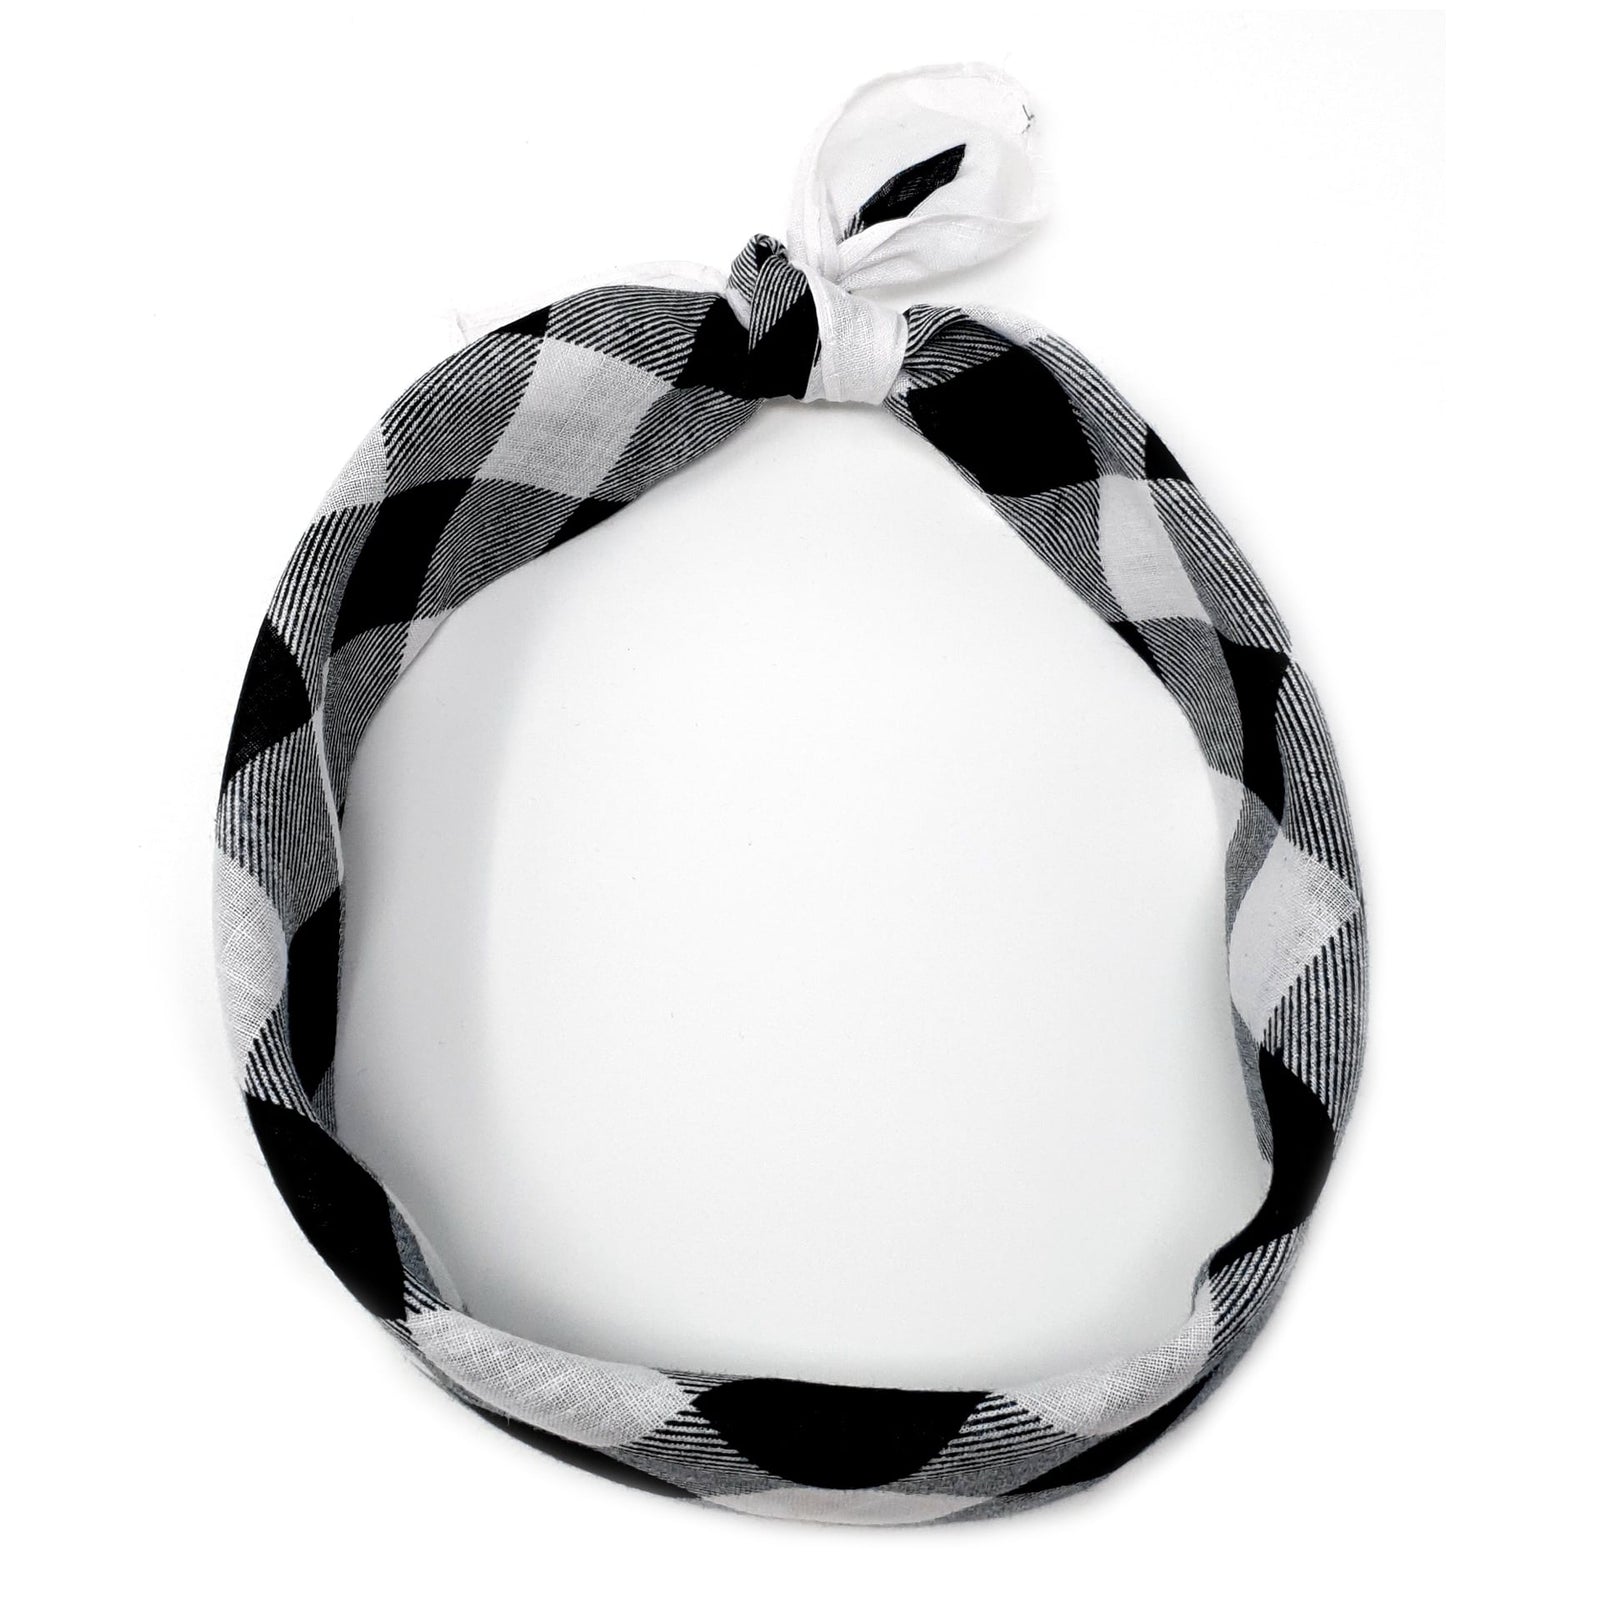 Checkered Bandana cs go skin for apple instal free